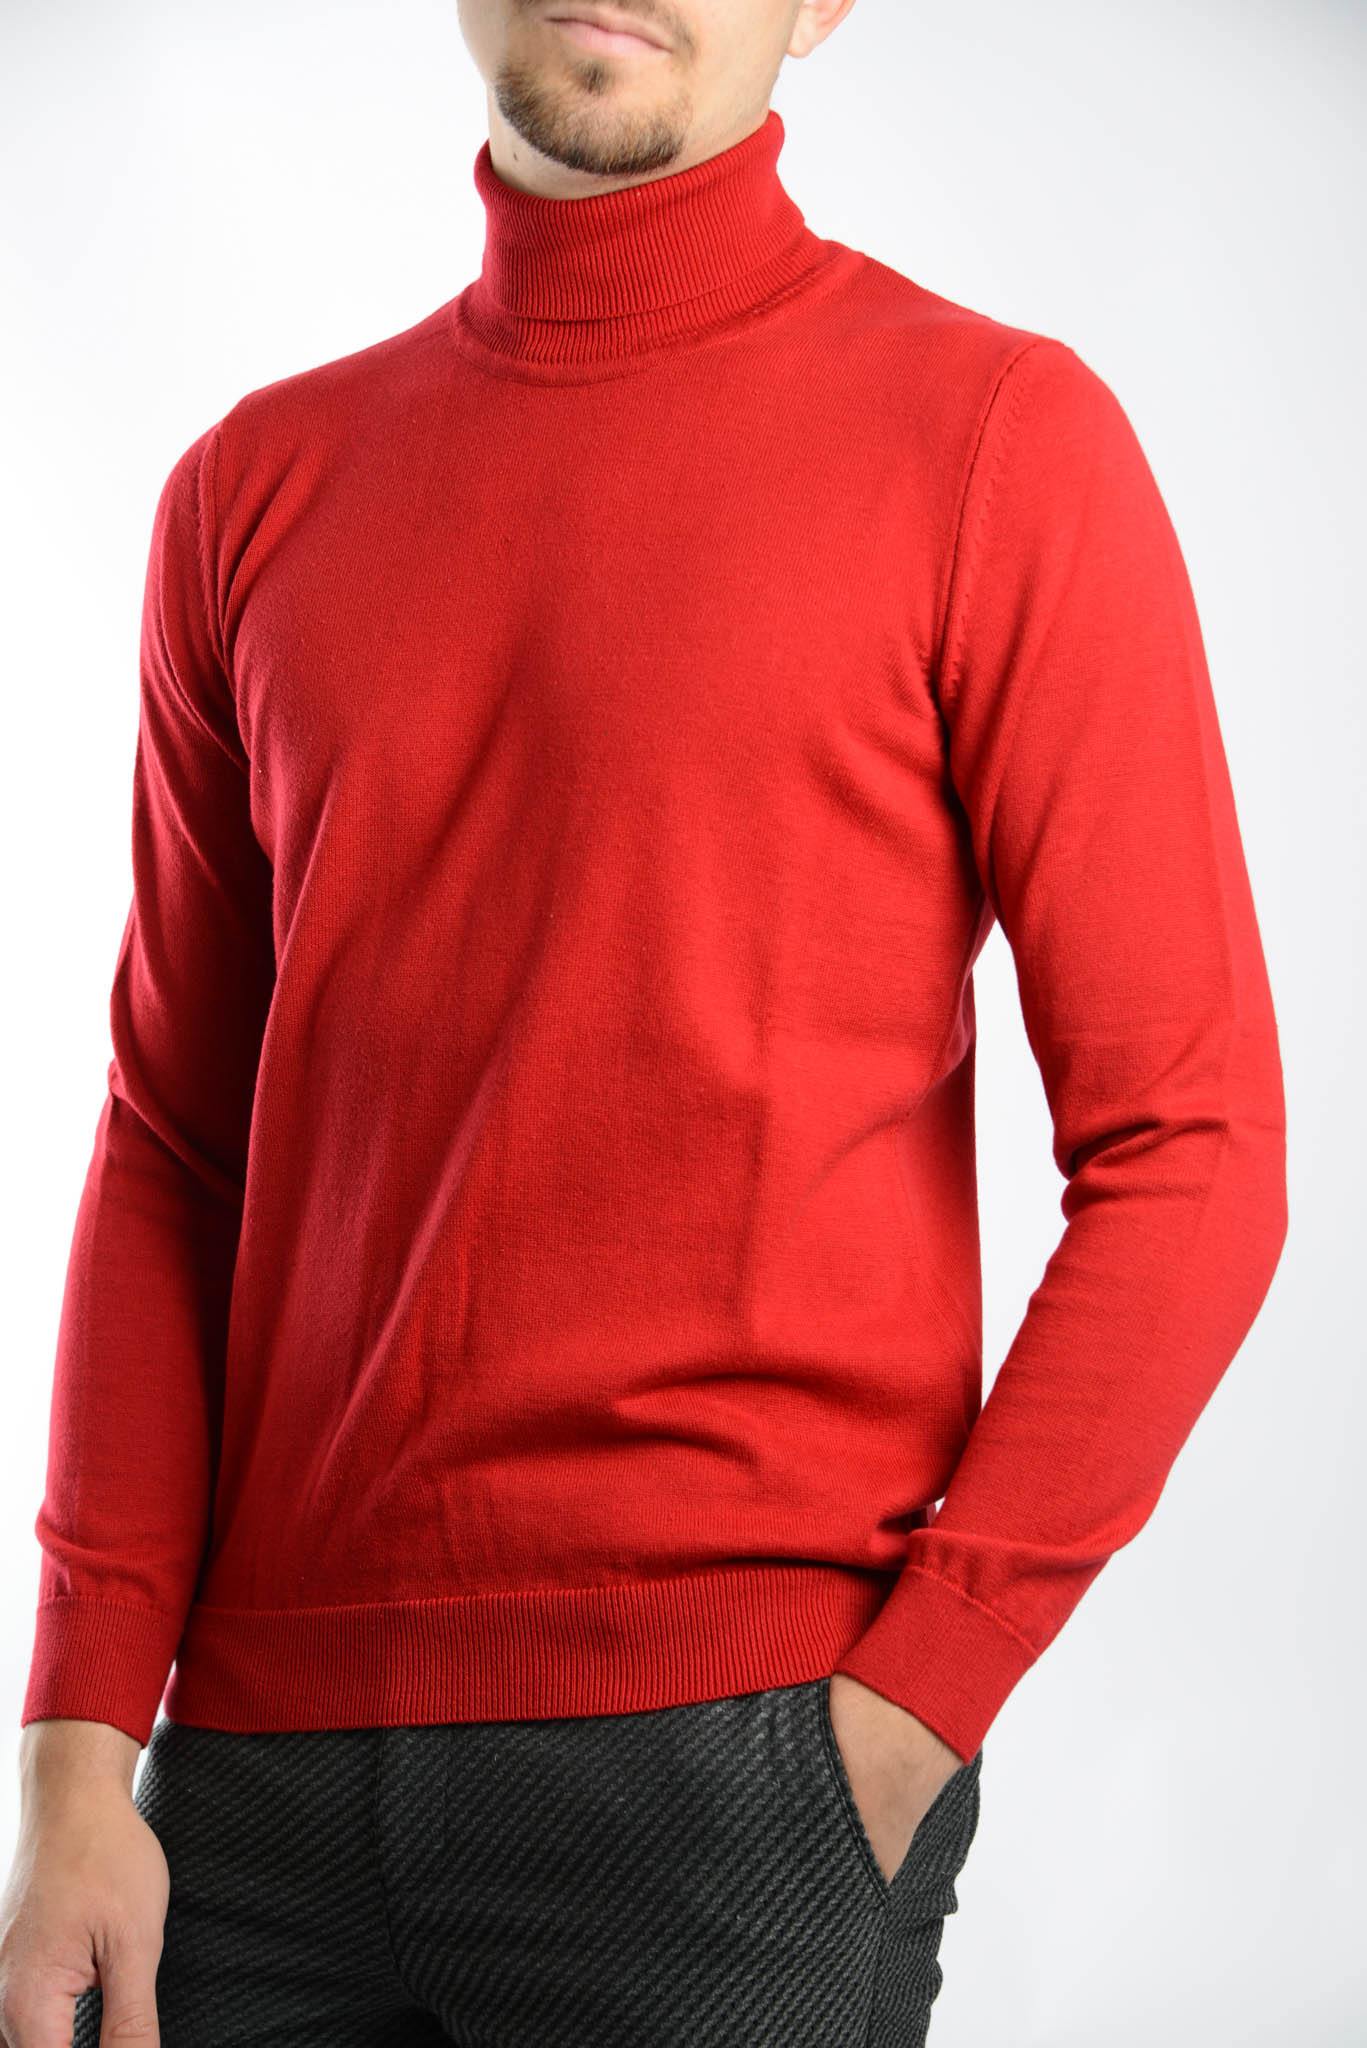 Cambridge Slim Fit Turtleneck Euro Sweater - Haight & Ashbury